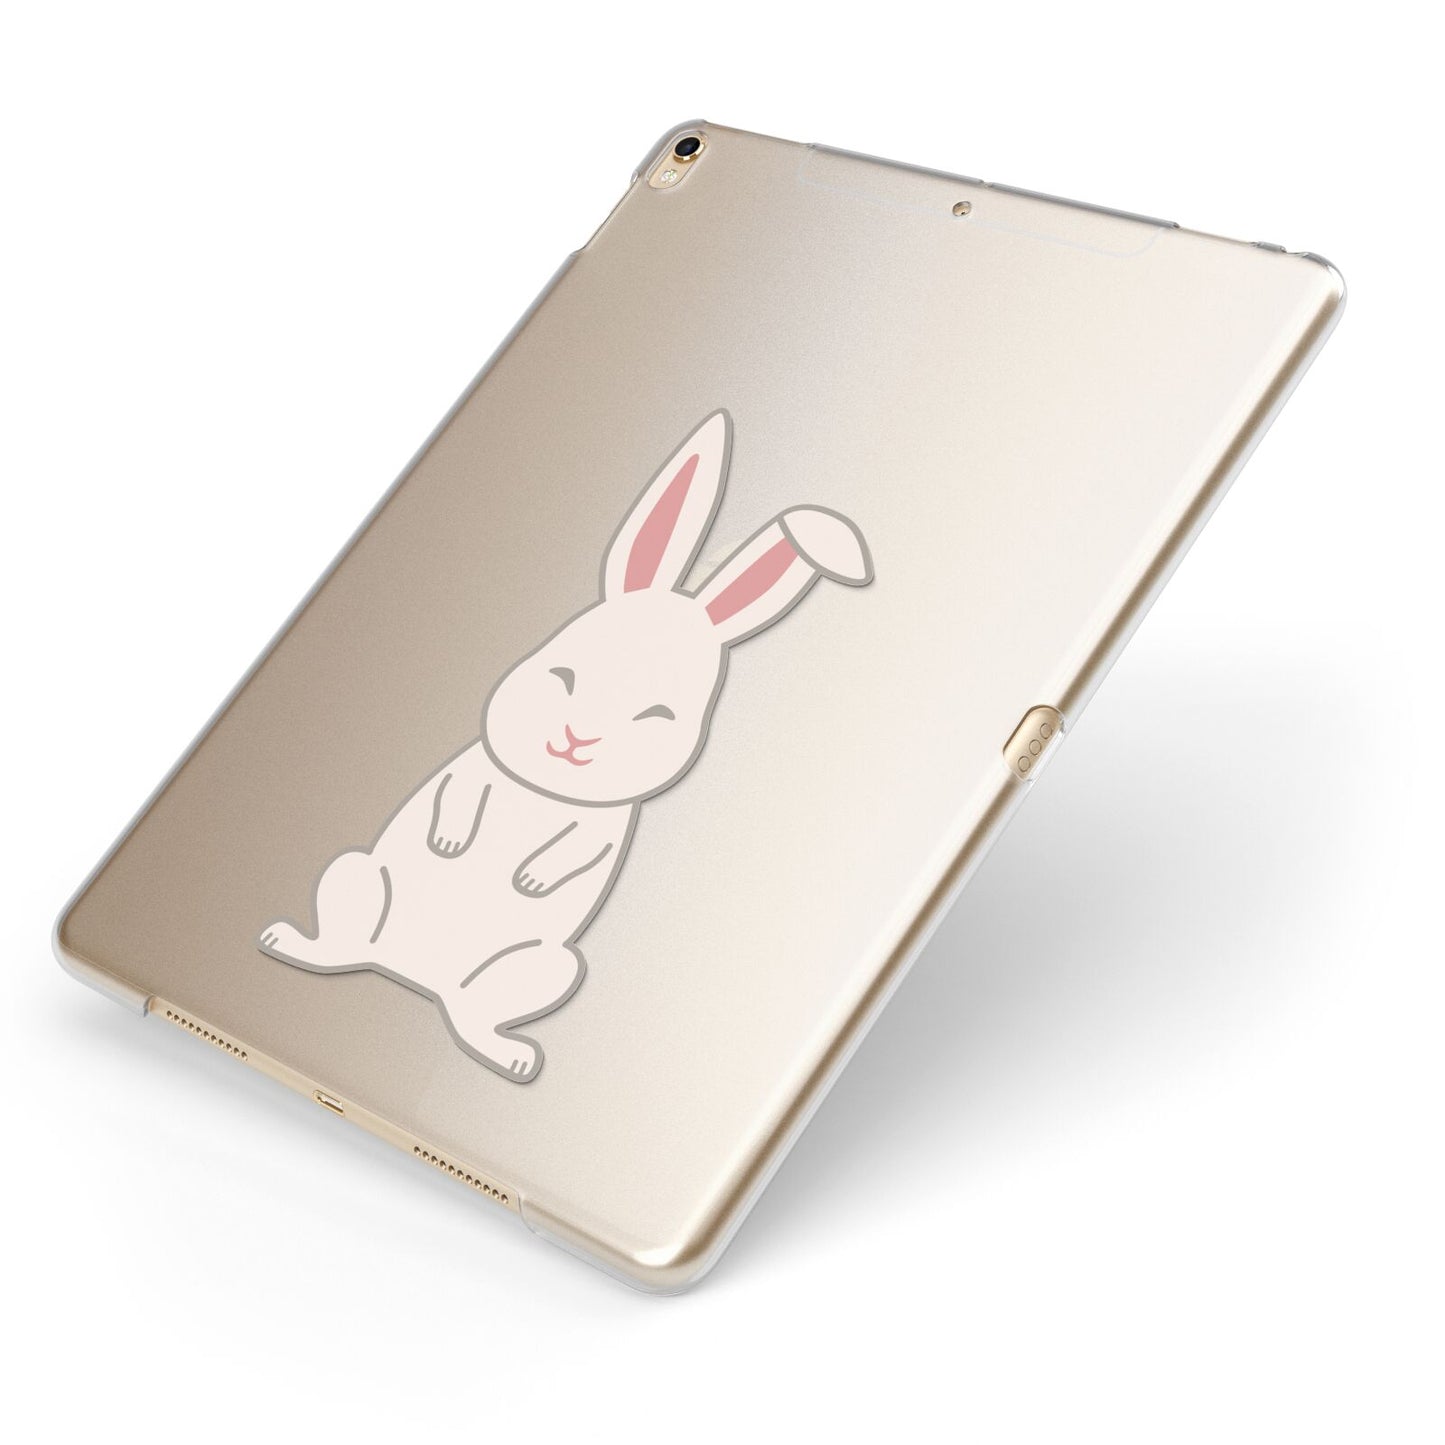 Bunny Apple iPad Case on Gold iPad Side View